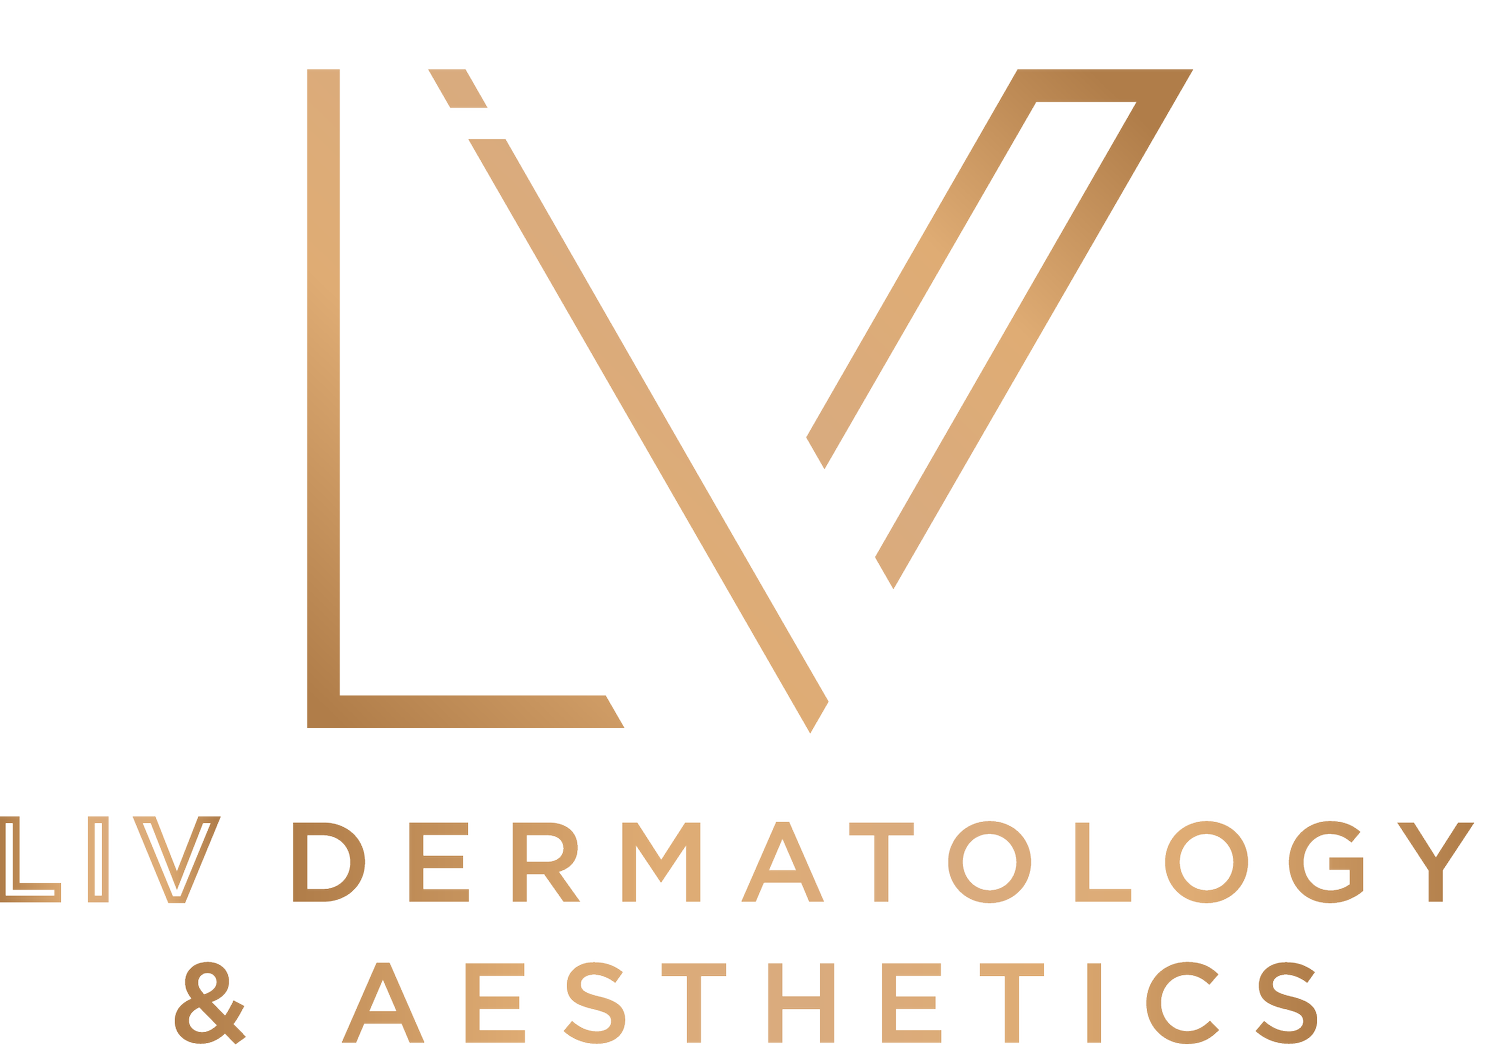 LIV Dermatology &amp; Aesthetics of San Antonio, Texas